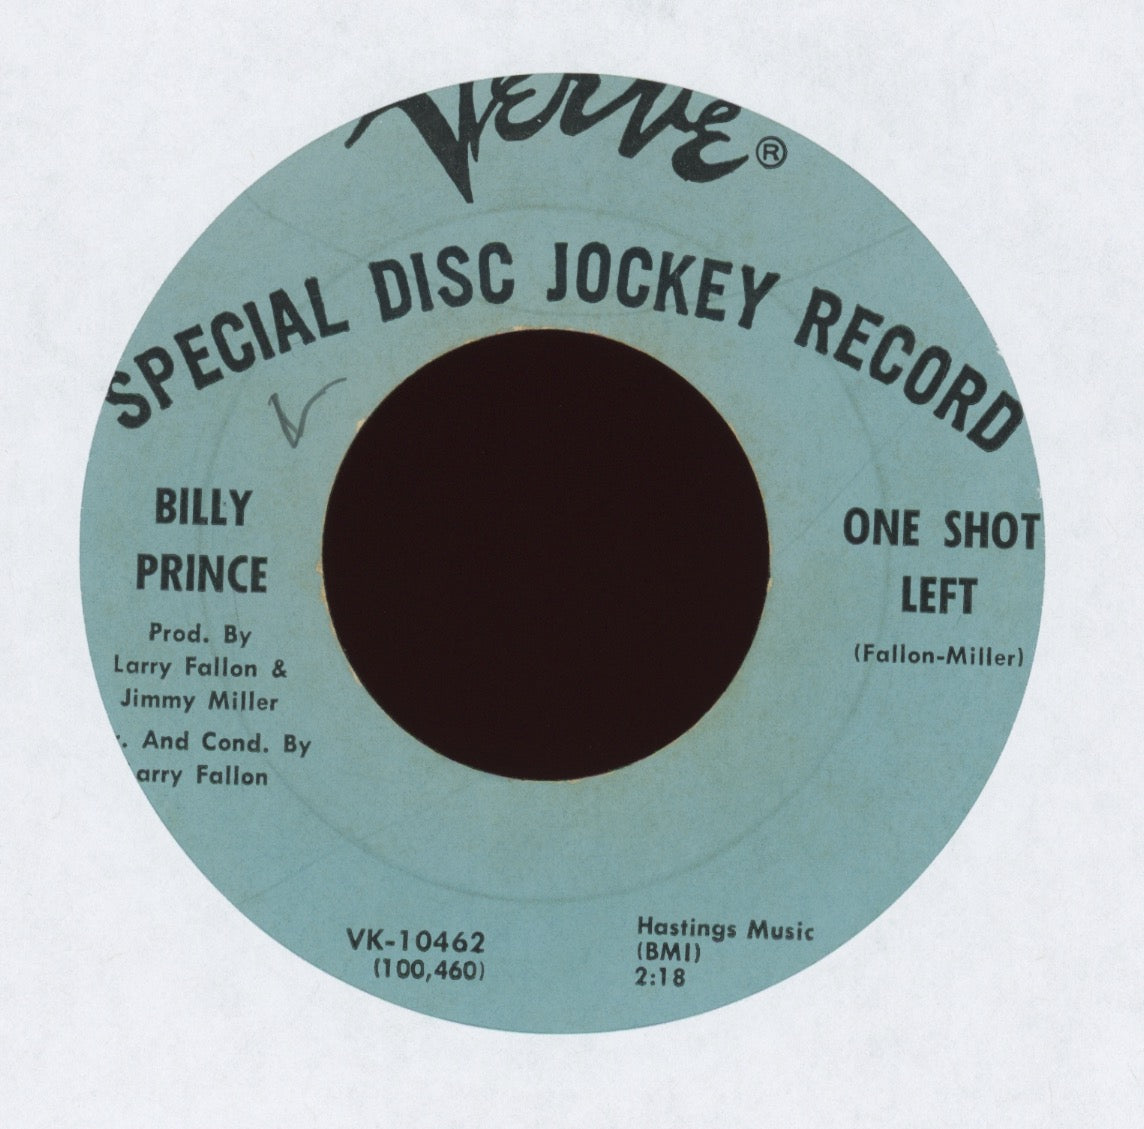 Billy Prince - One Shot Left on Verve Promo Northern Soul 45